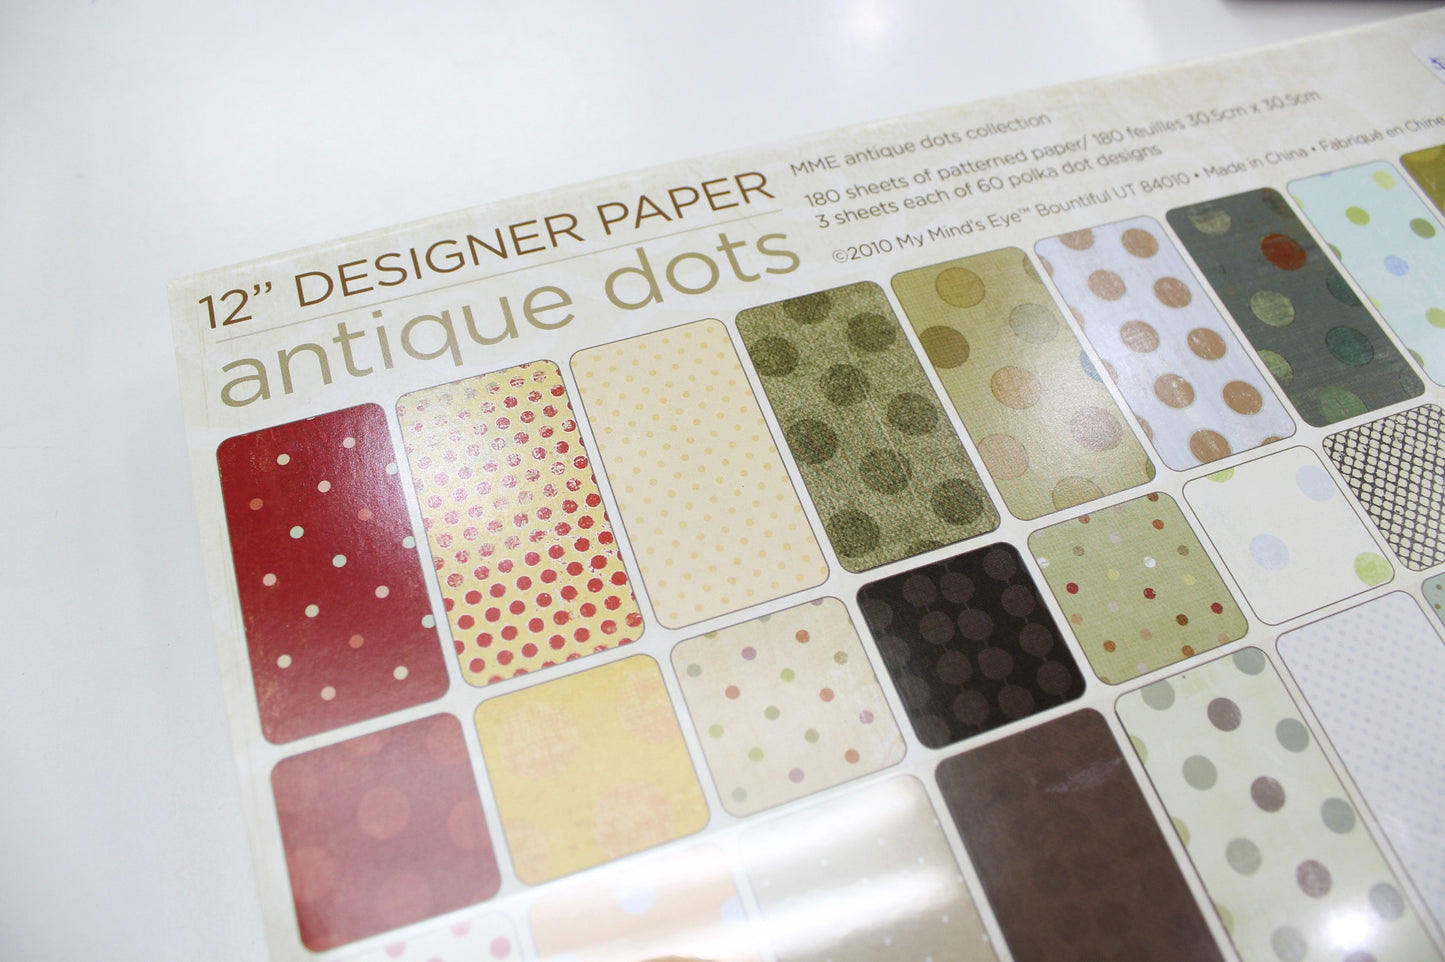 12" Designer Paper Pad - Antique Dots - 180 Sheets